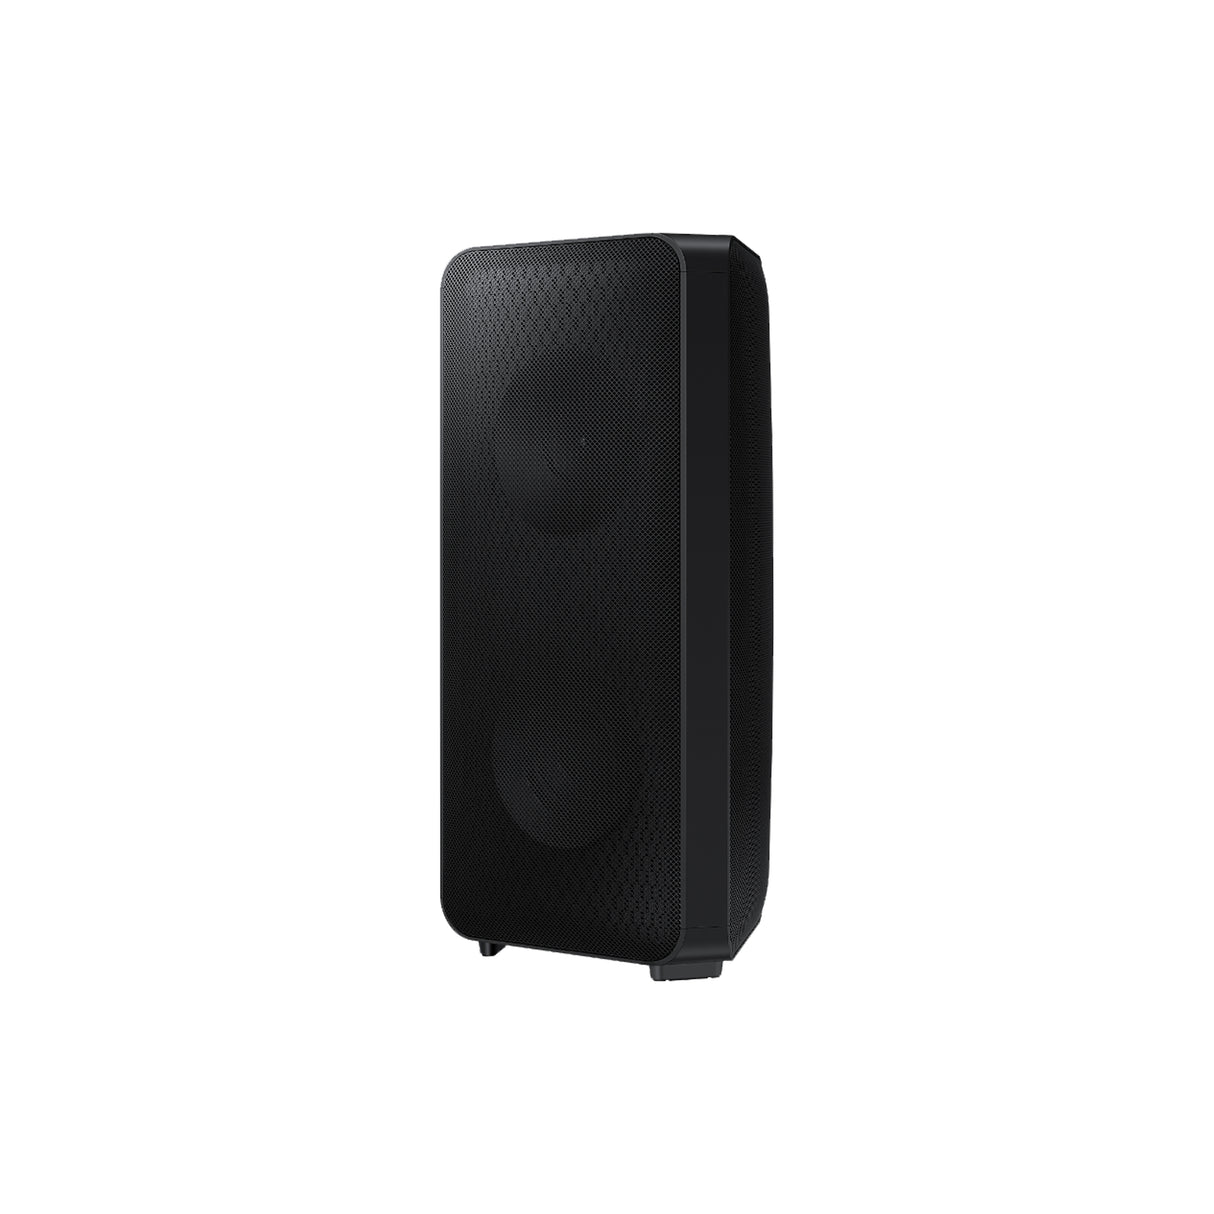 Samsung MX-ST40B Sound Tower- Portable Bluetooth Powered Speaker with Inbuilt Battery